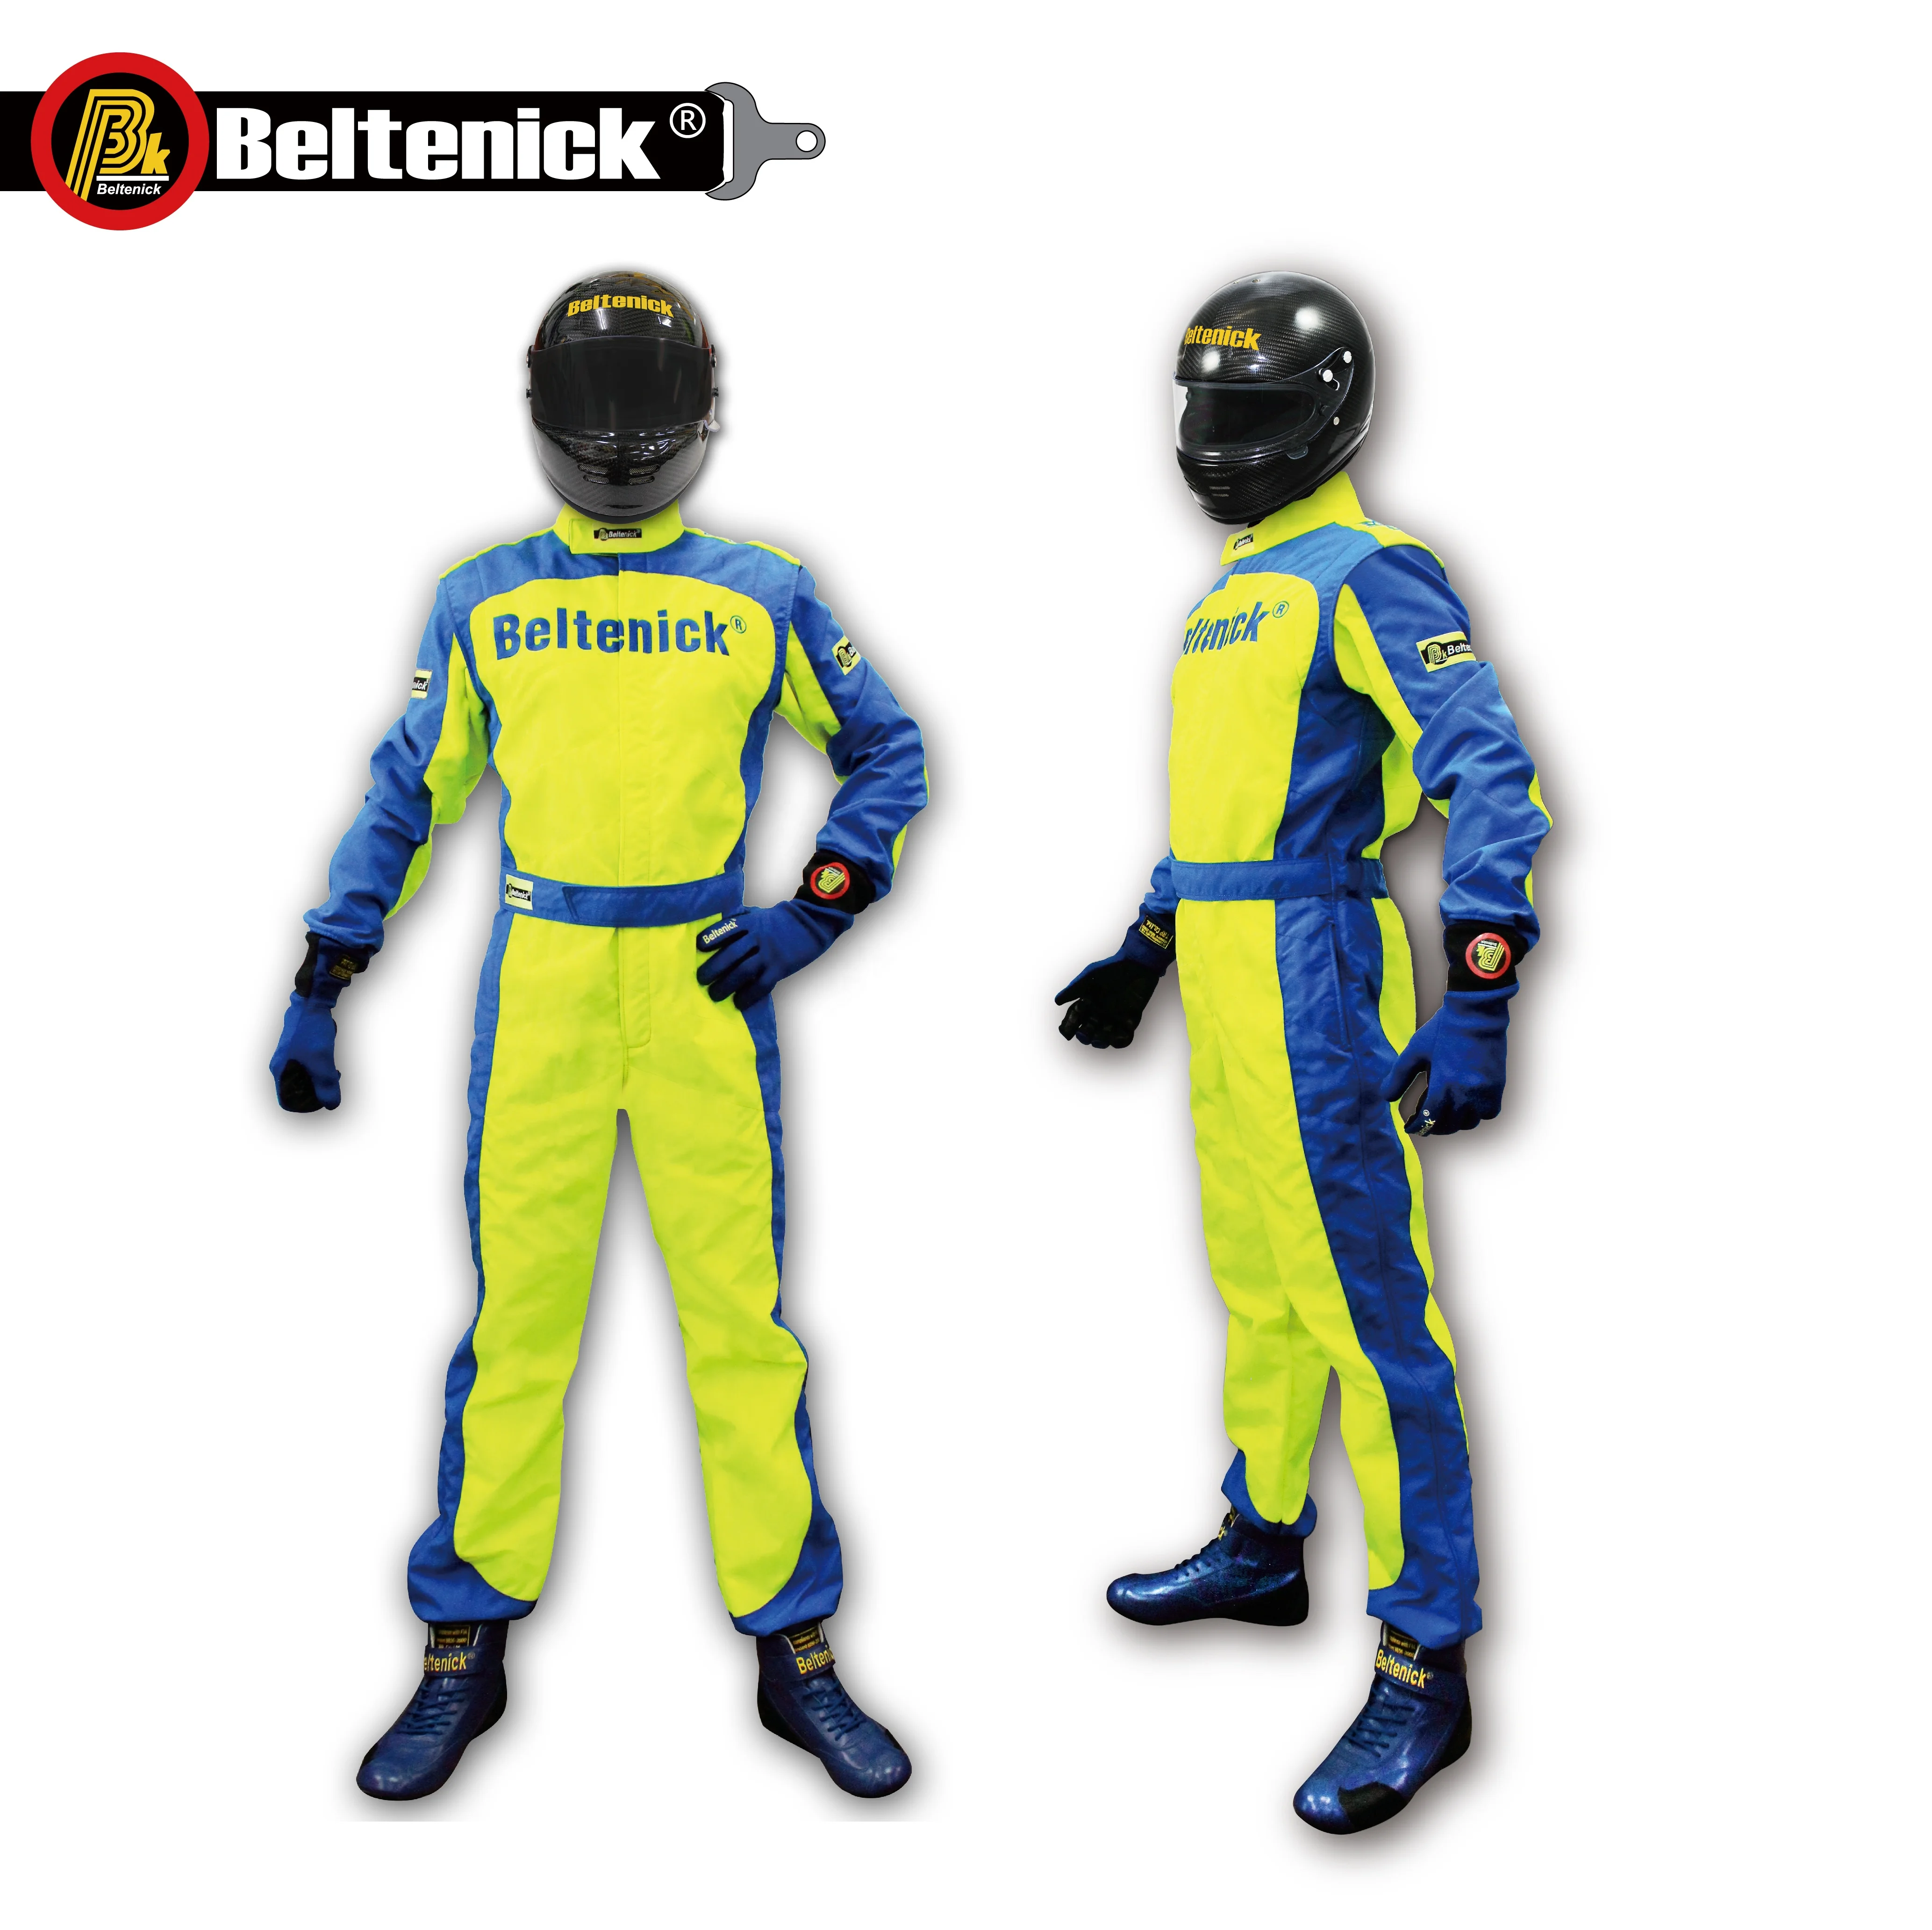 Go Kart Racing Suit CIK-FIA Level 2 